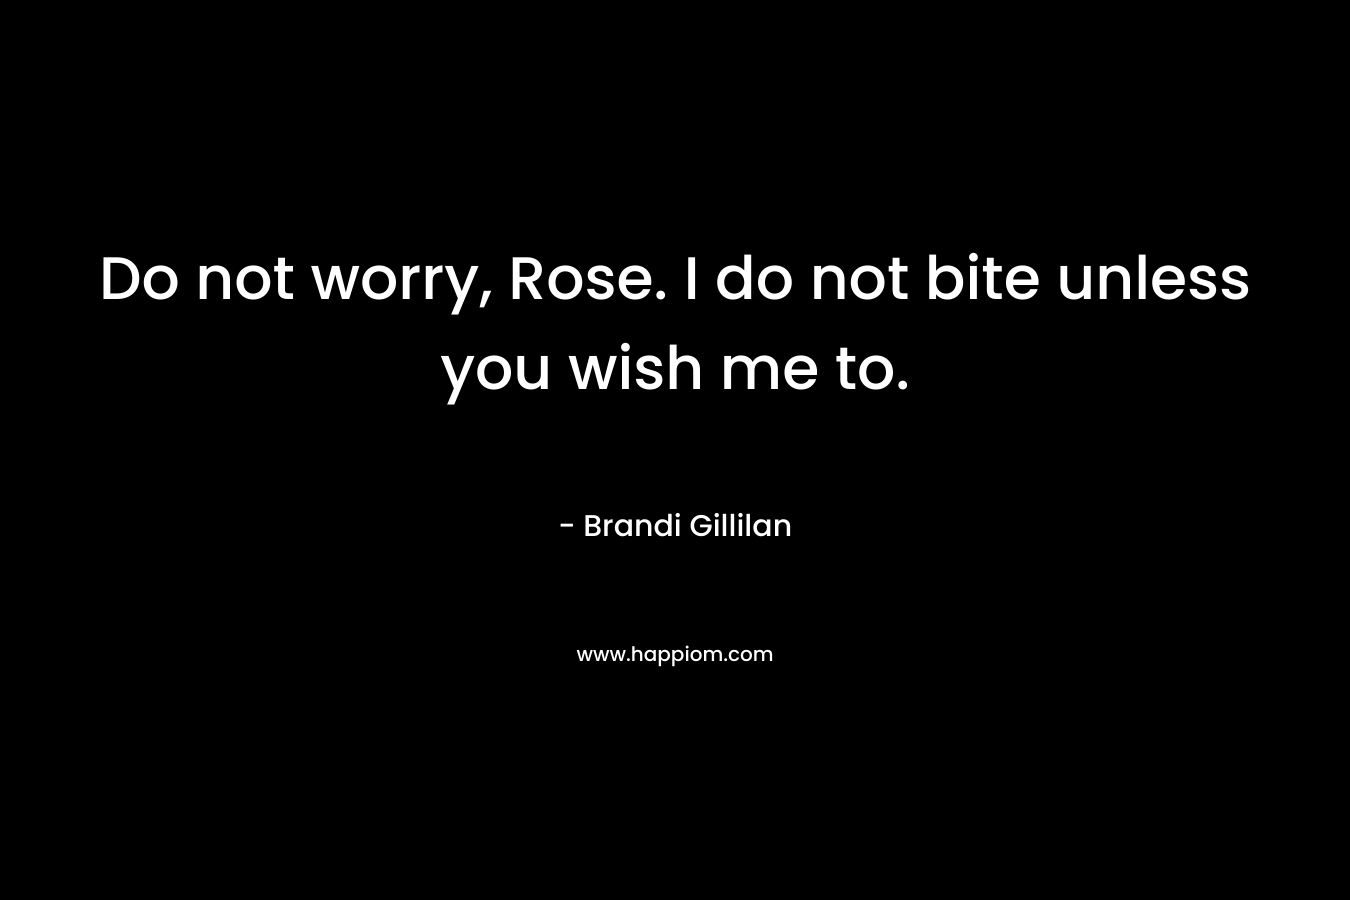 Do not worry, Rose. I do not bite unless you wish me to. – Brandi Gillilan